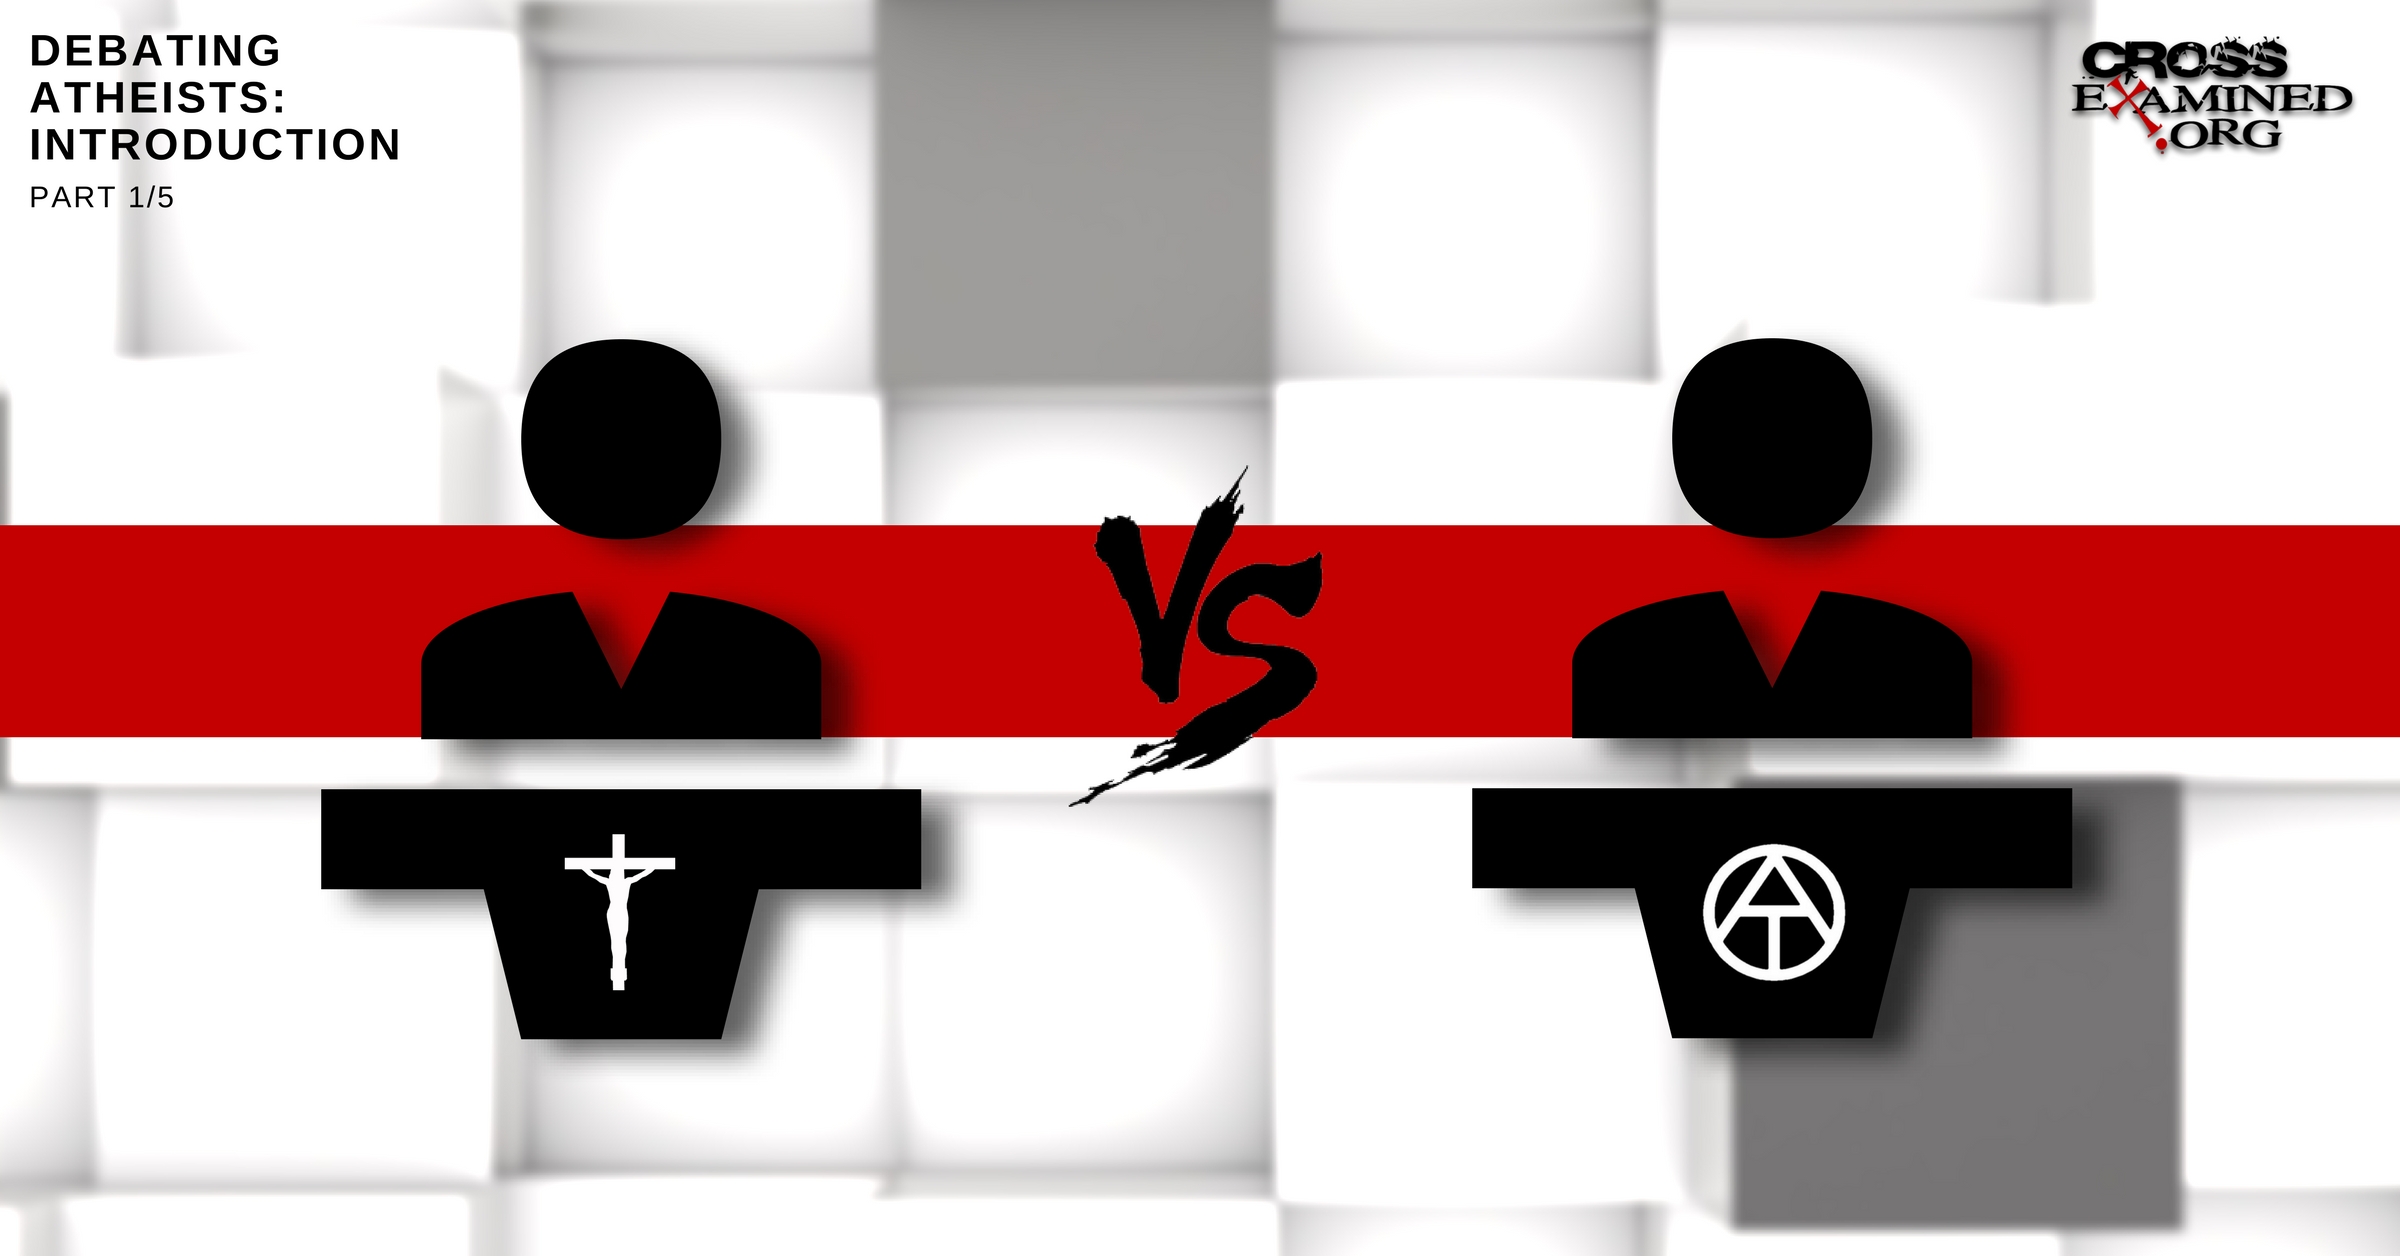 Debate Atheism Introduction